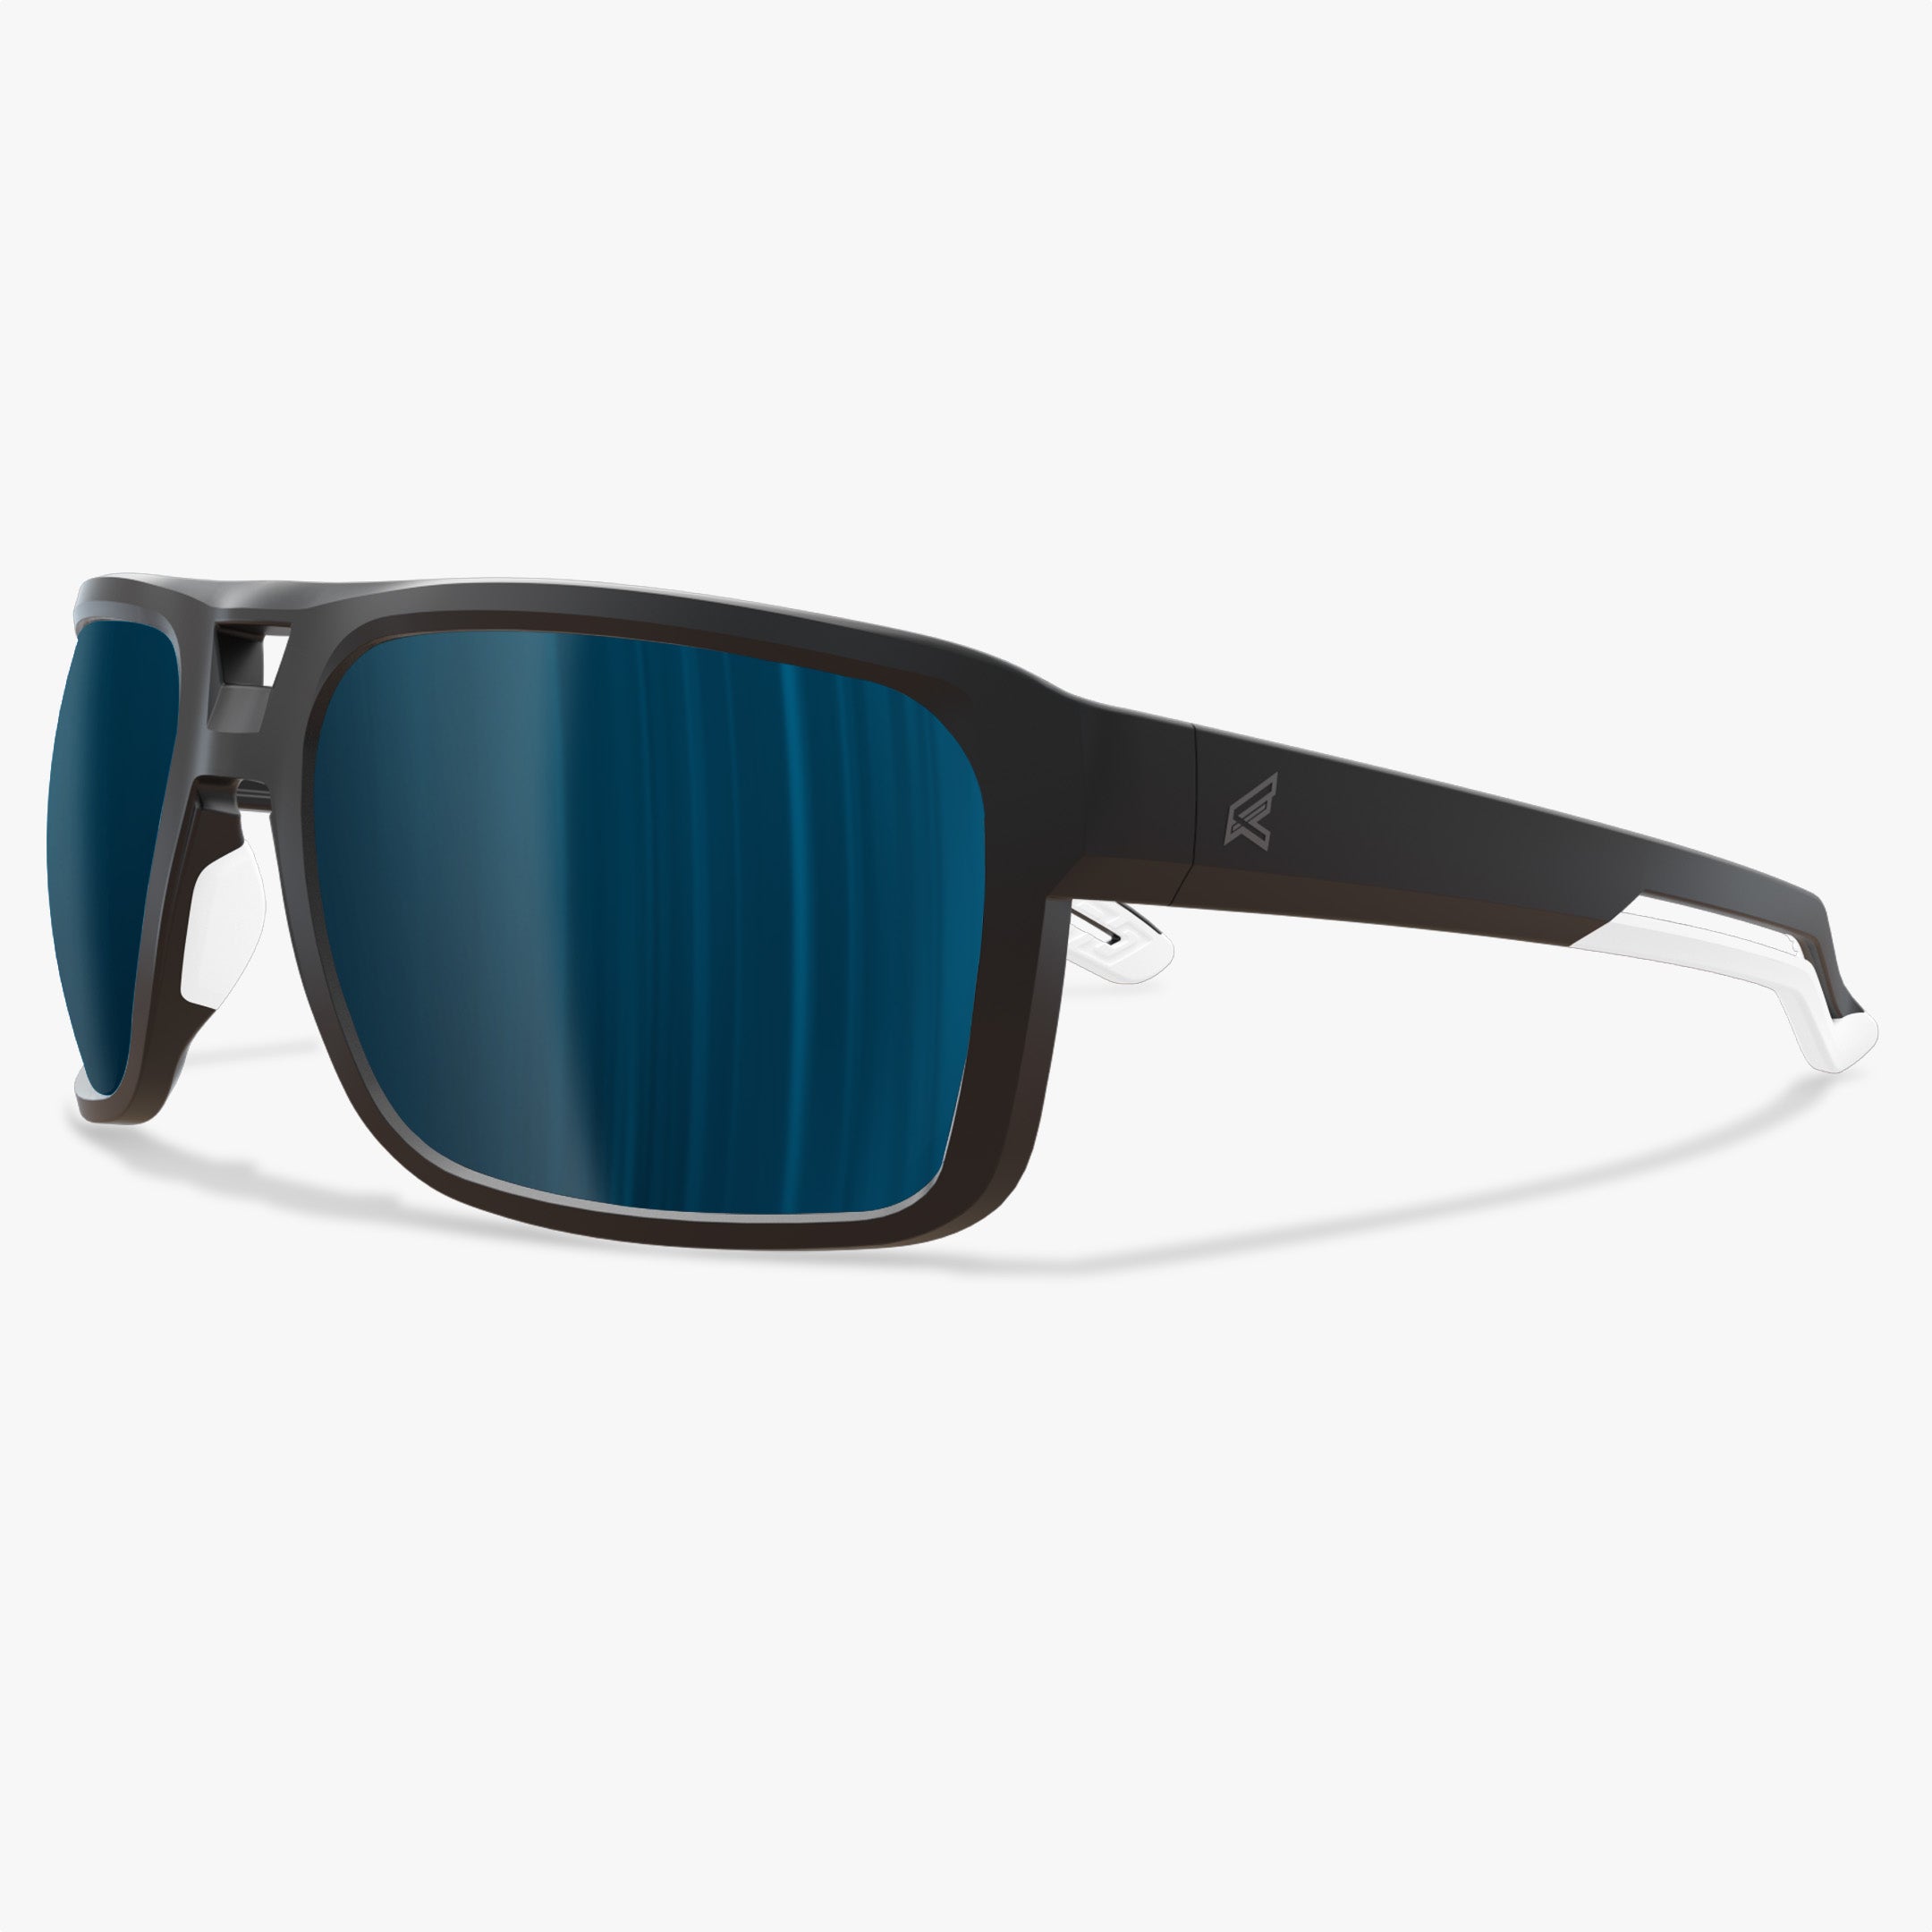 Edge Eyewear | Men's Navigator Sunglasses | Edge Highline | Aviator Type Sunglasses Matte Black with White TPR / Polarized Aqua Precision Blue Mirror